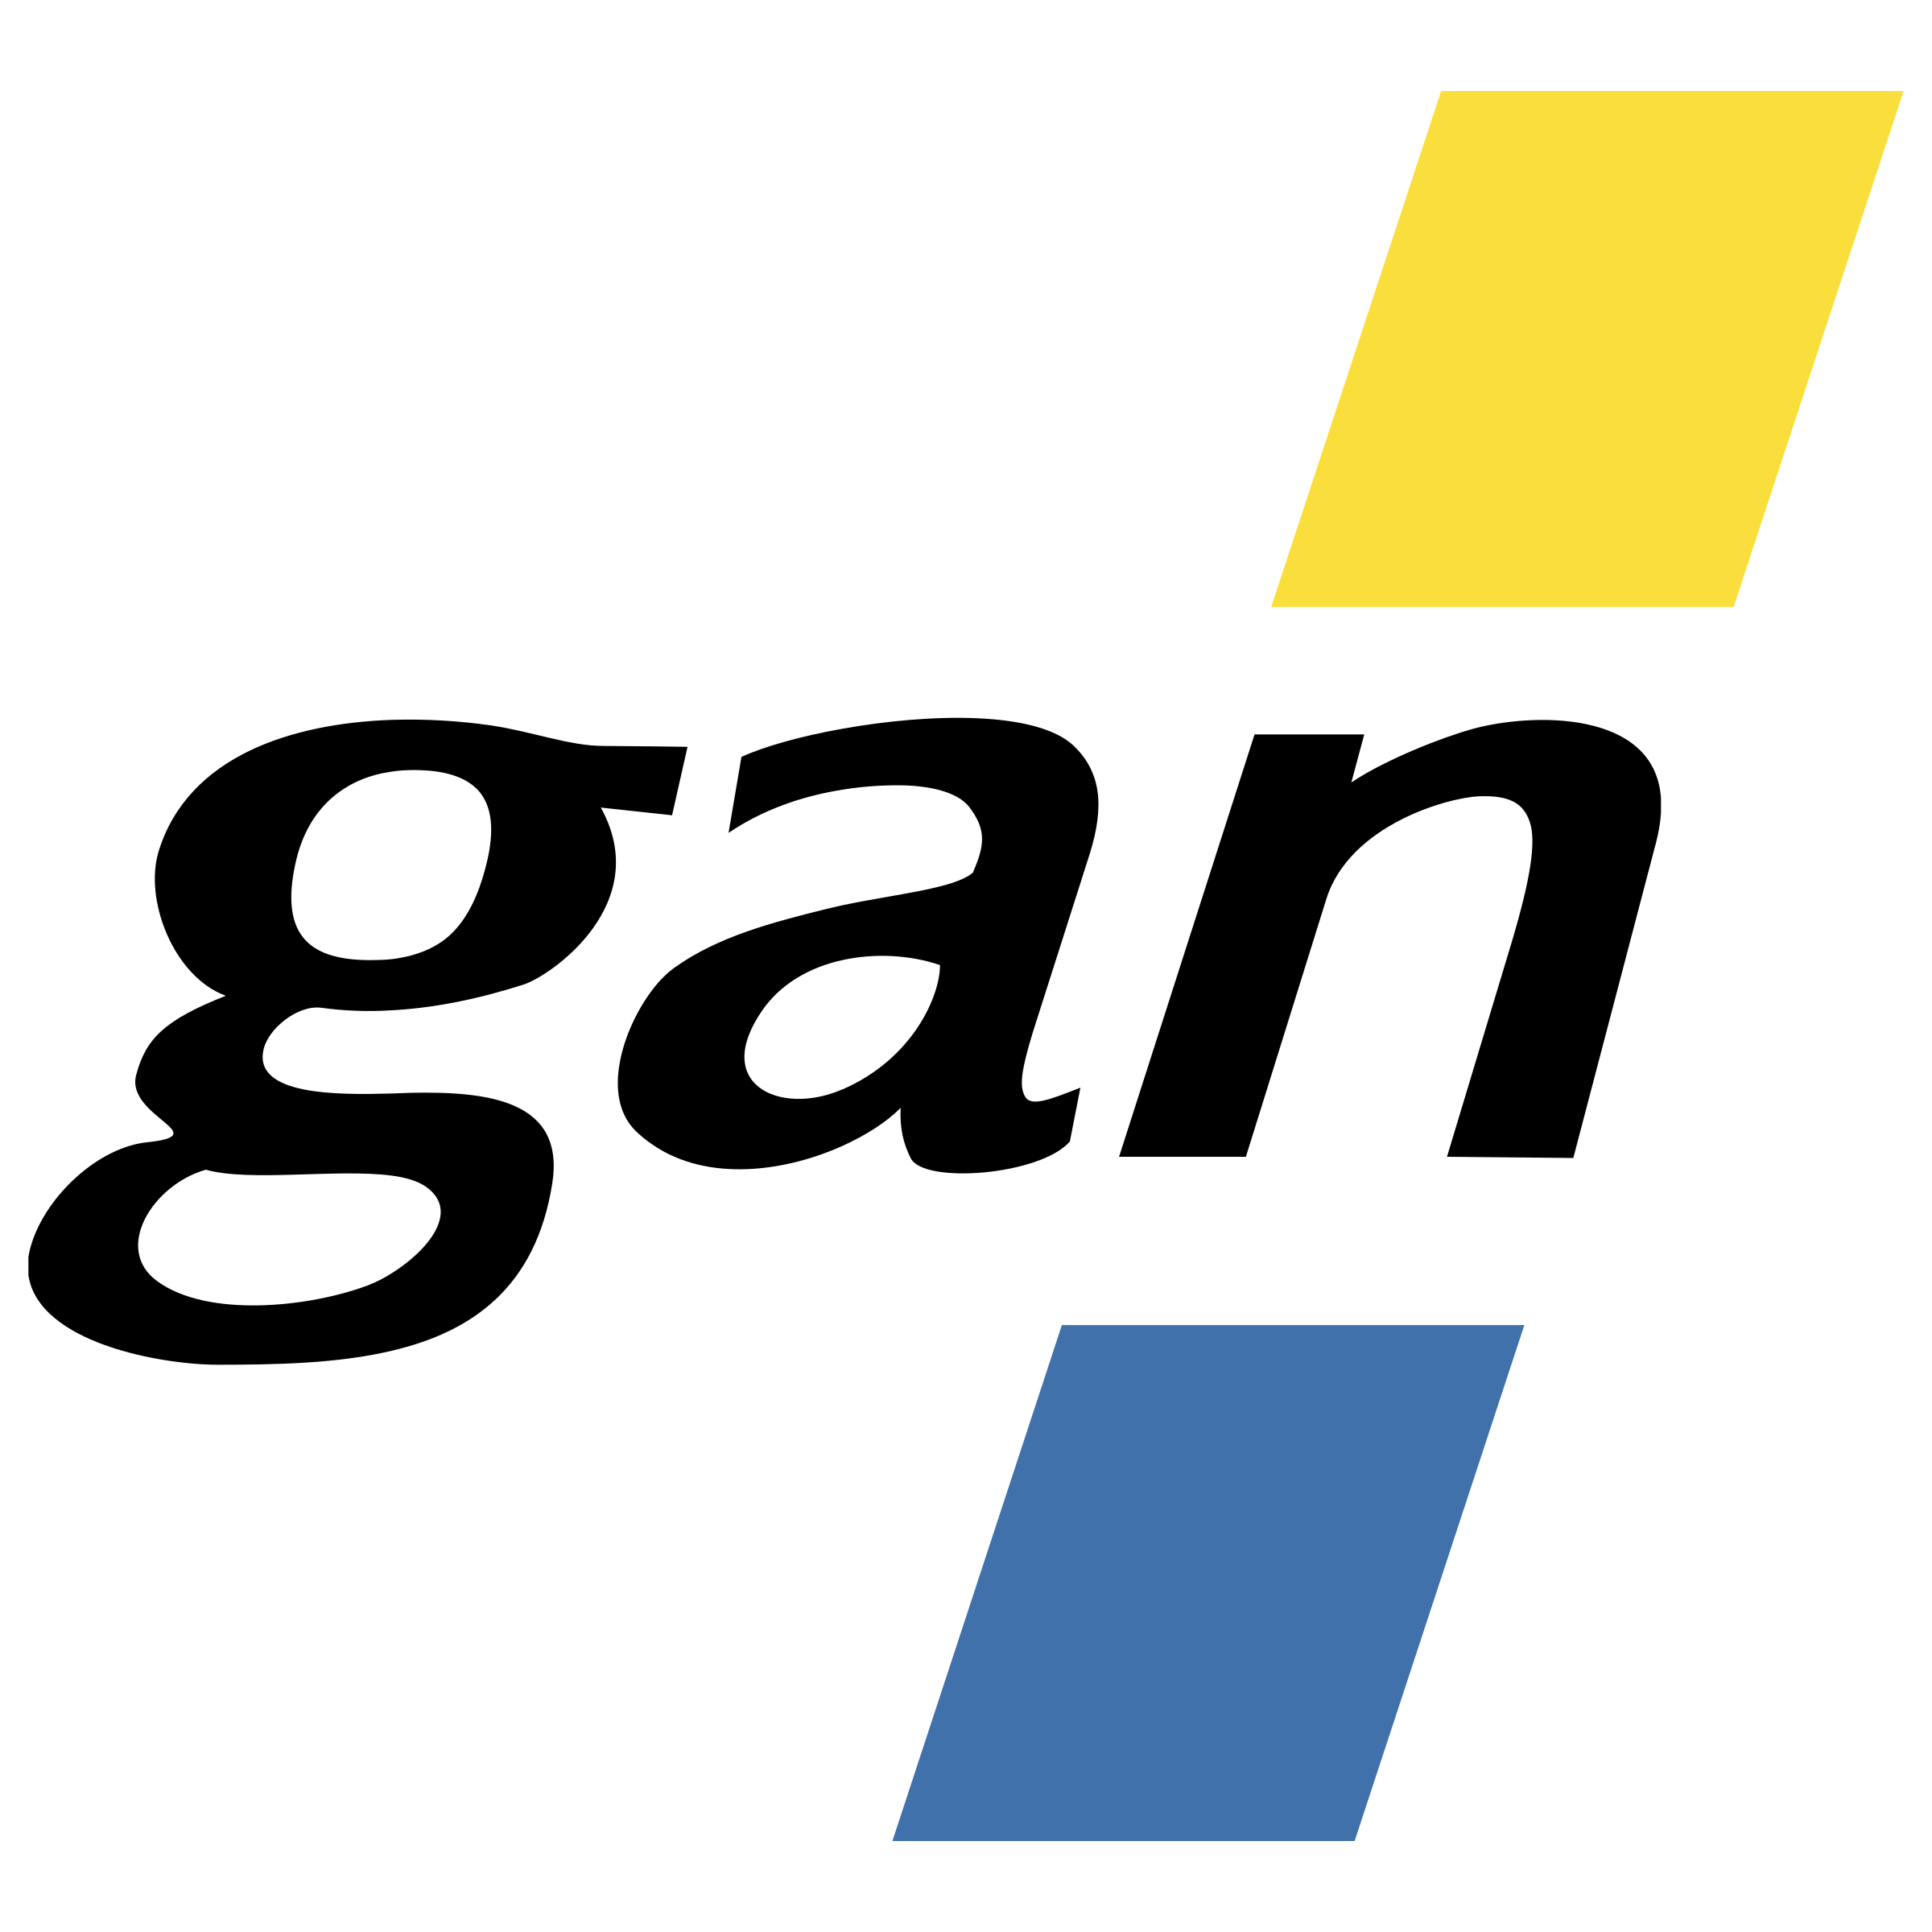 Gan Logo - Gan Logo PNG Transparent & SVG Vector - Freebie Supply